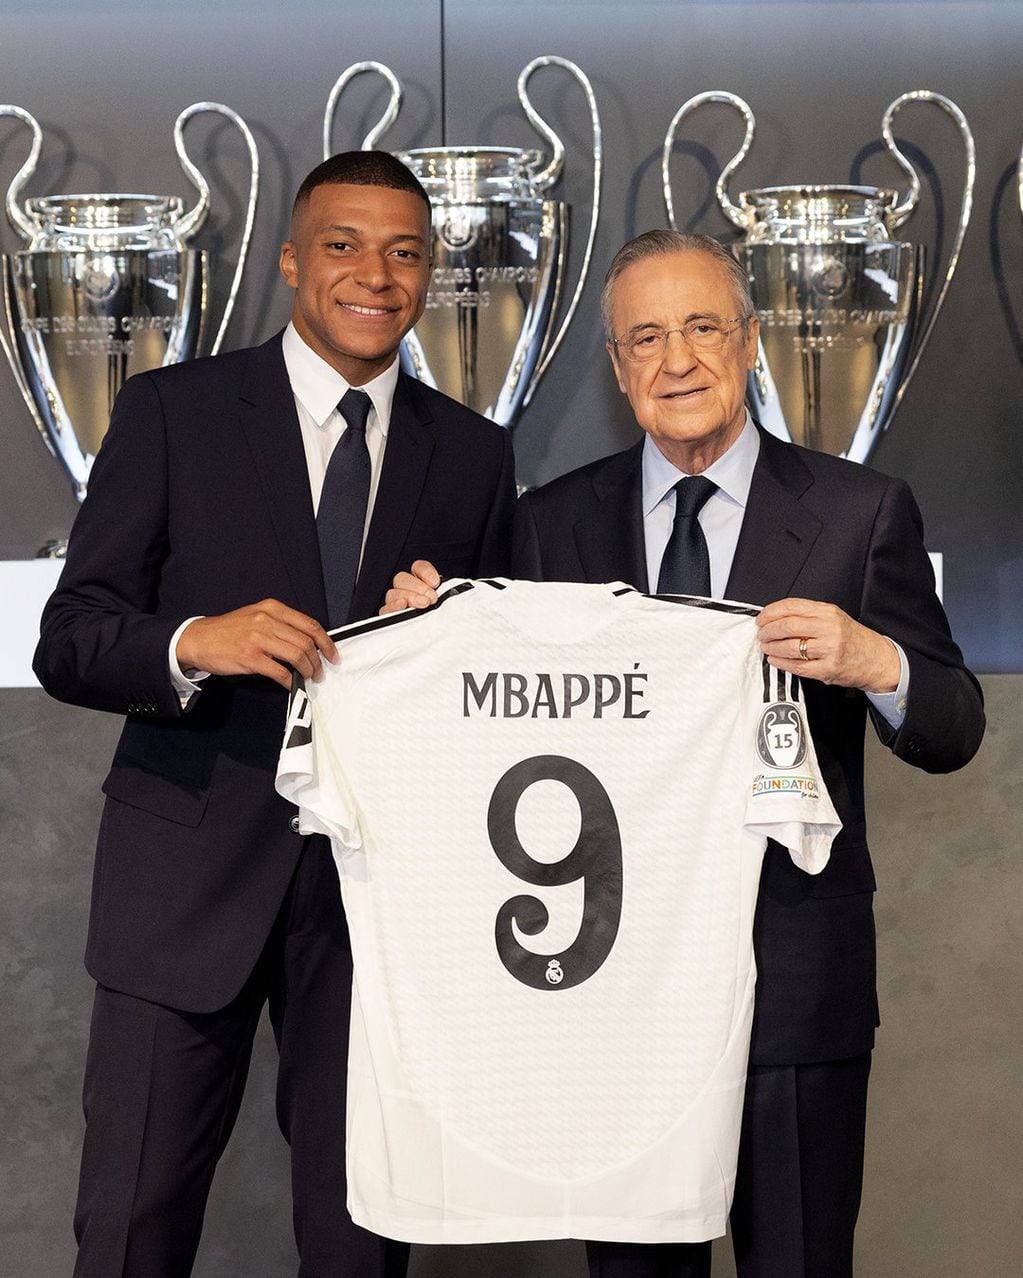 Kylian Mbappé usará la camiseta número 9 en el Real Madrid